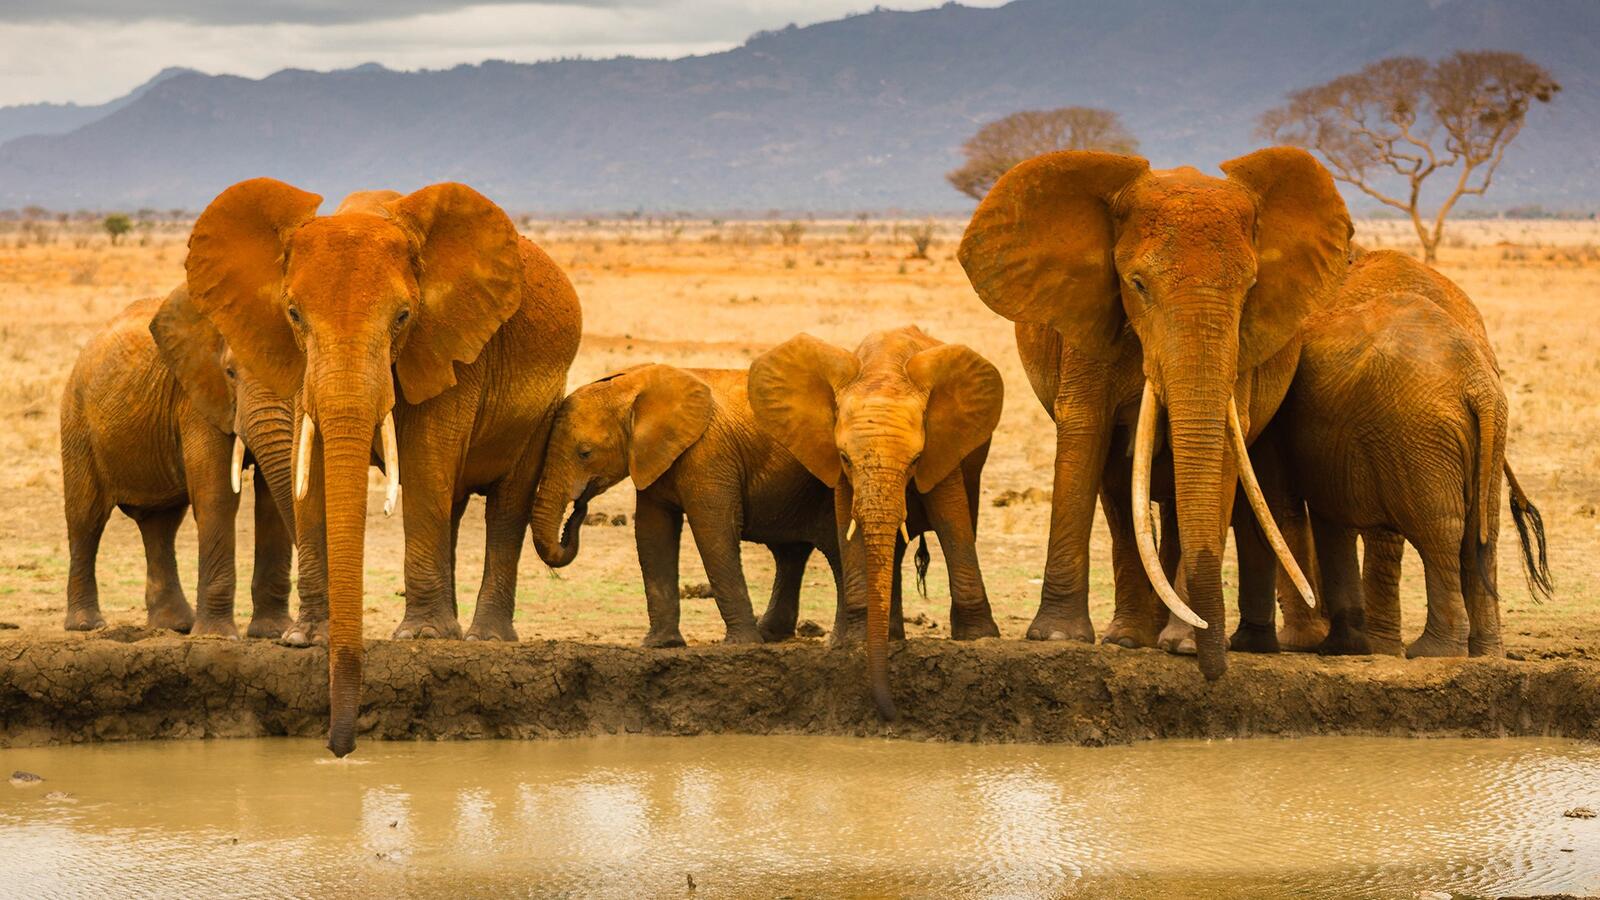 Wallpapers elephants africa sand on the desktop